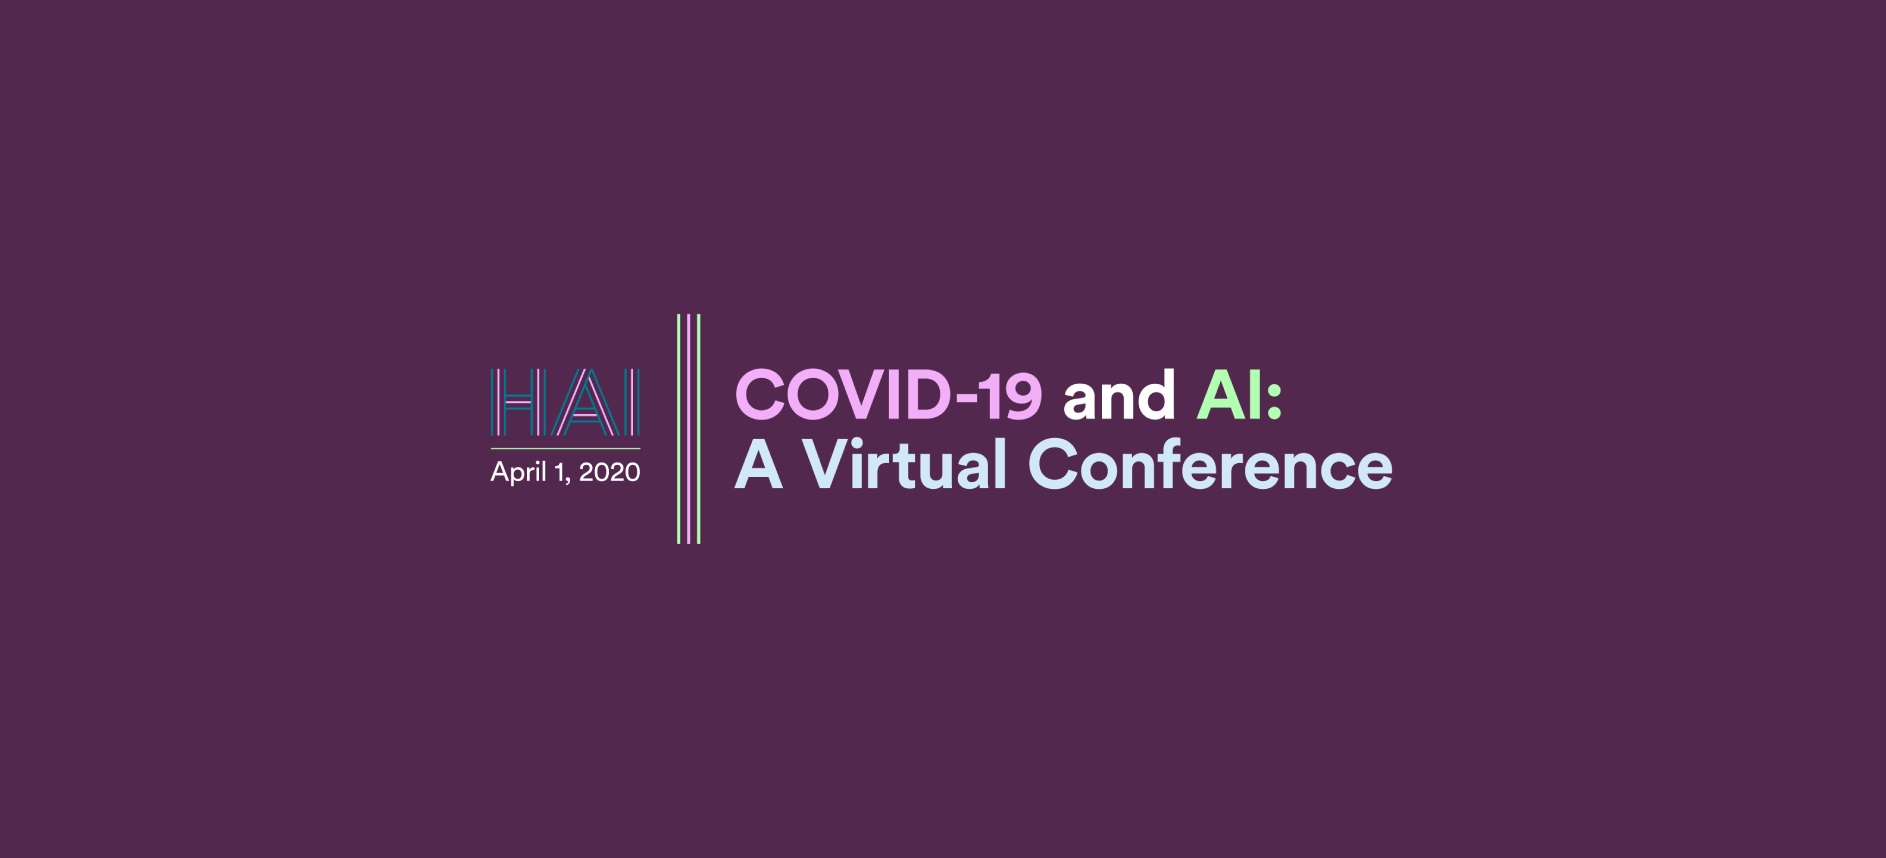 COVID-19 and AI: A Virtual Conference